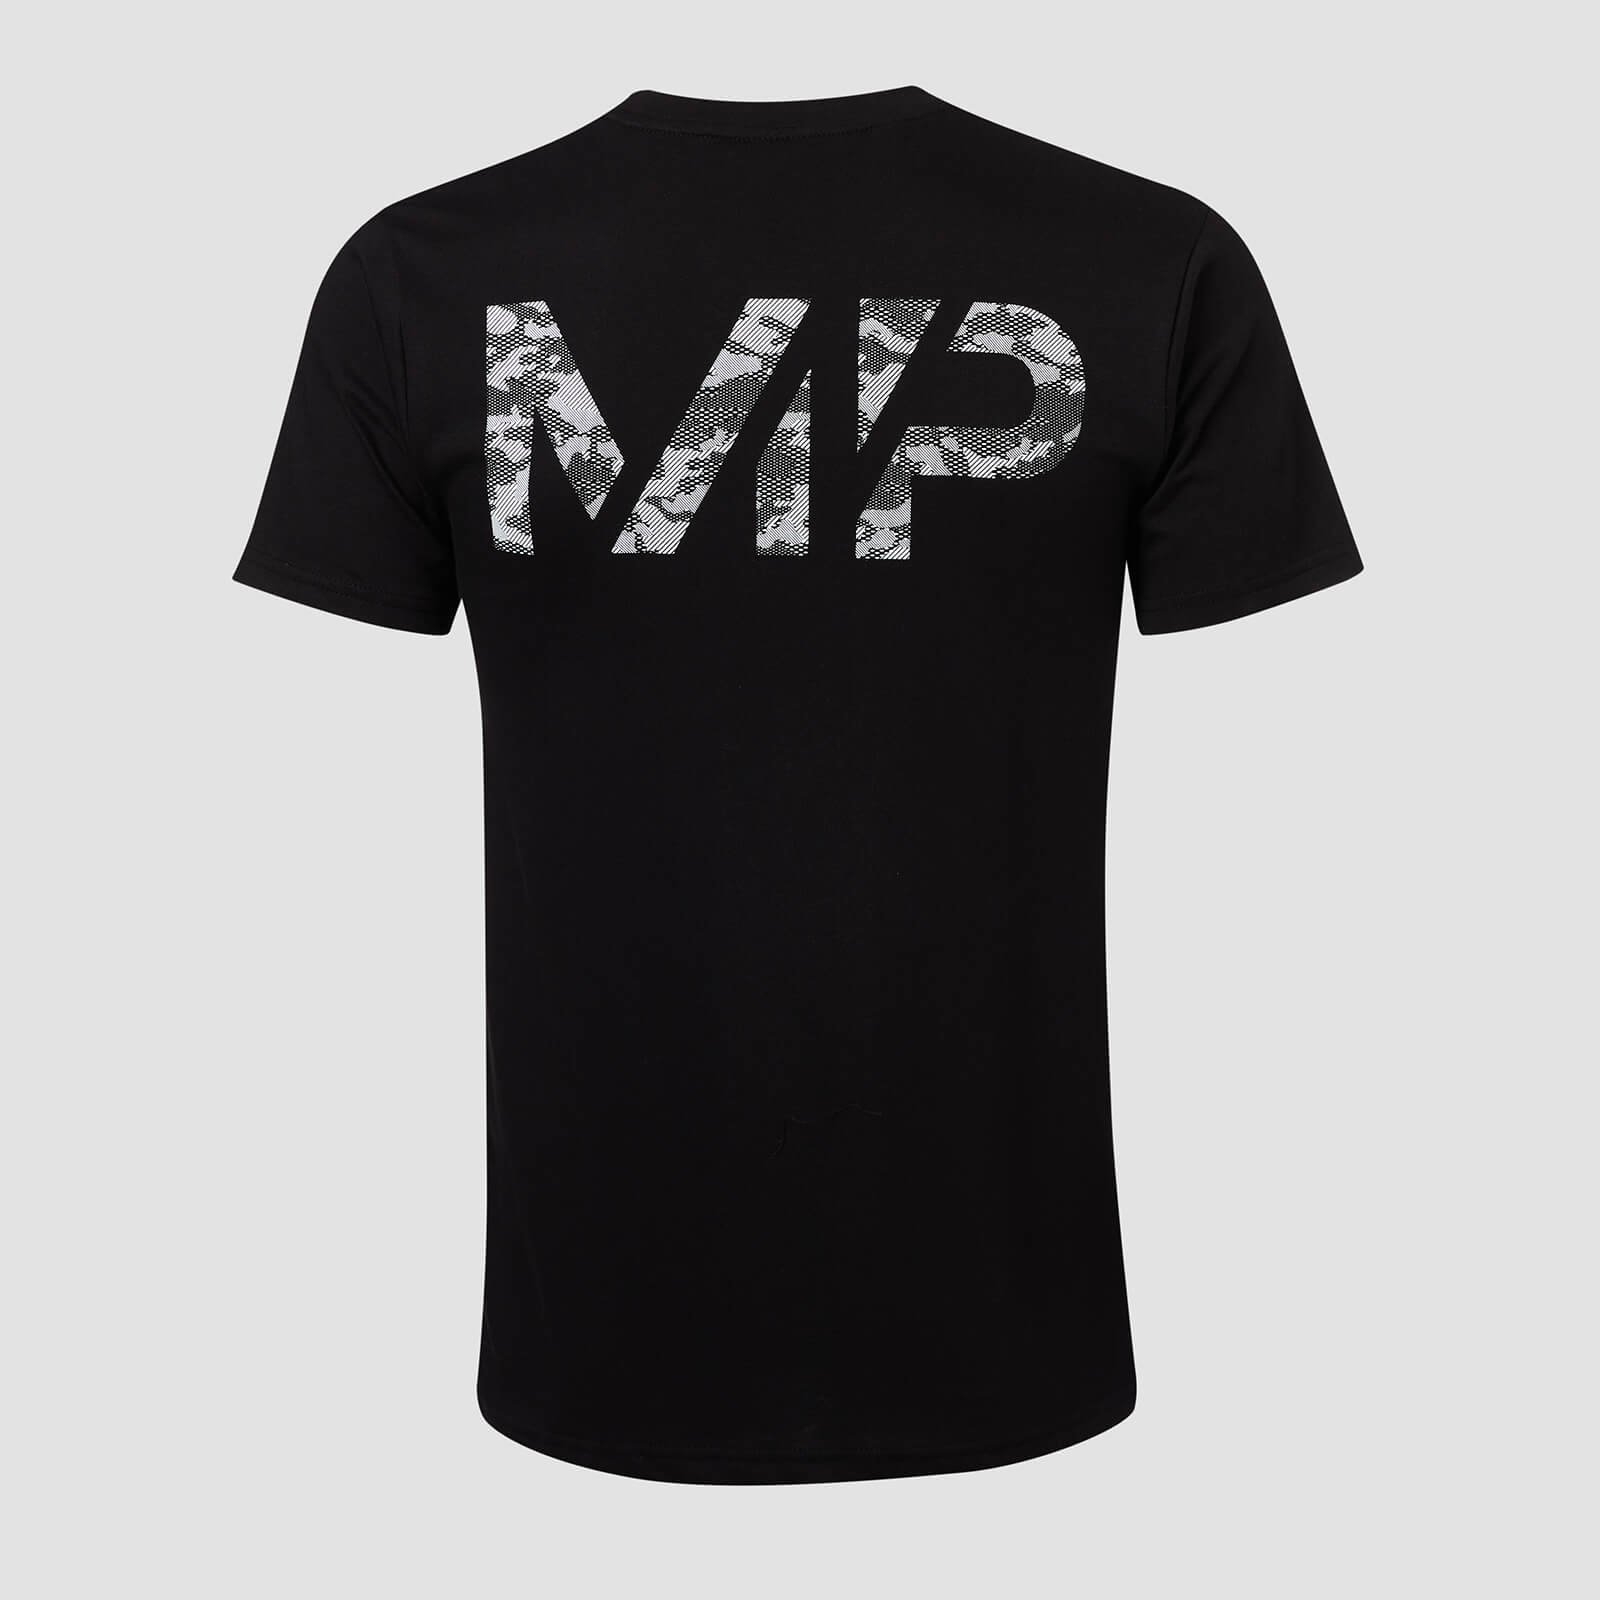 MP Men's Geo Camo T-Shirt - Black/White